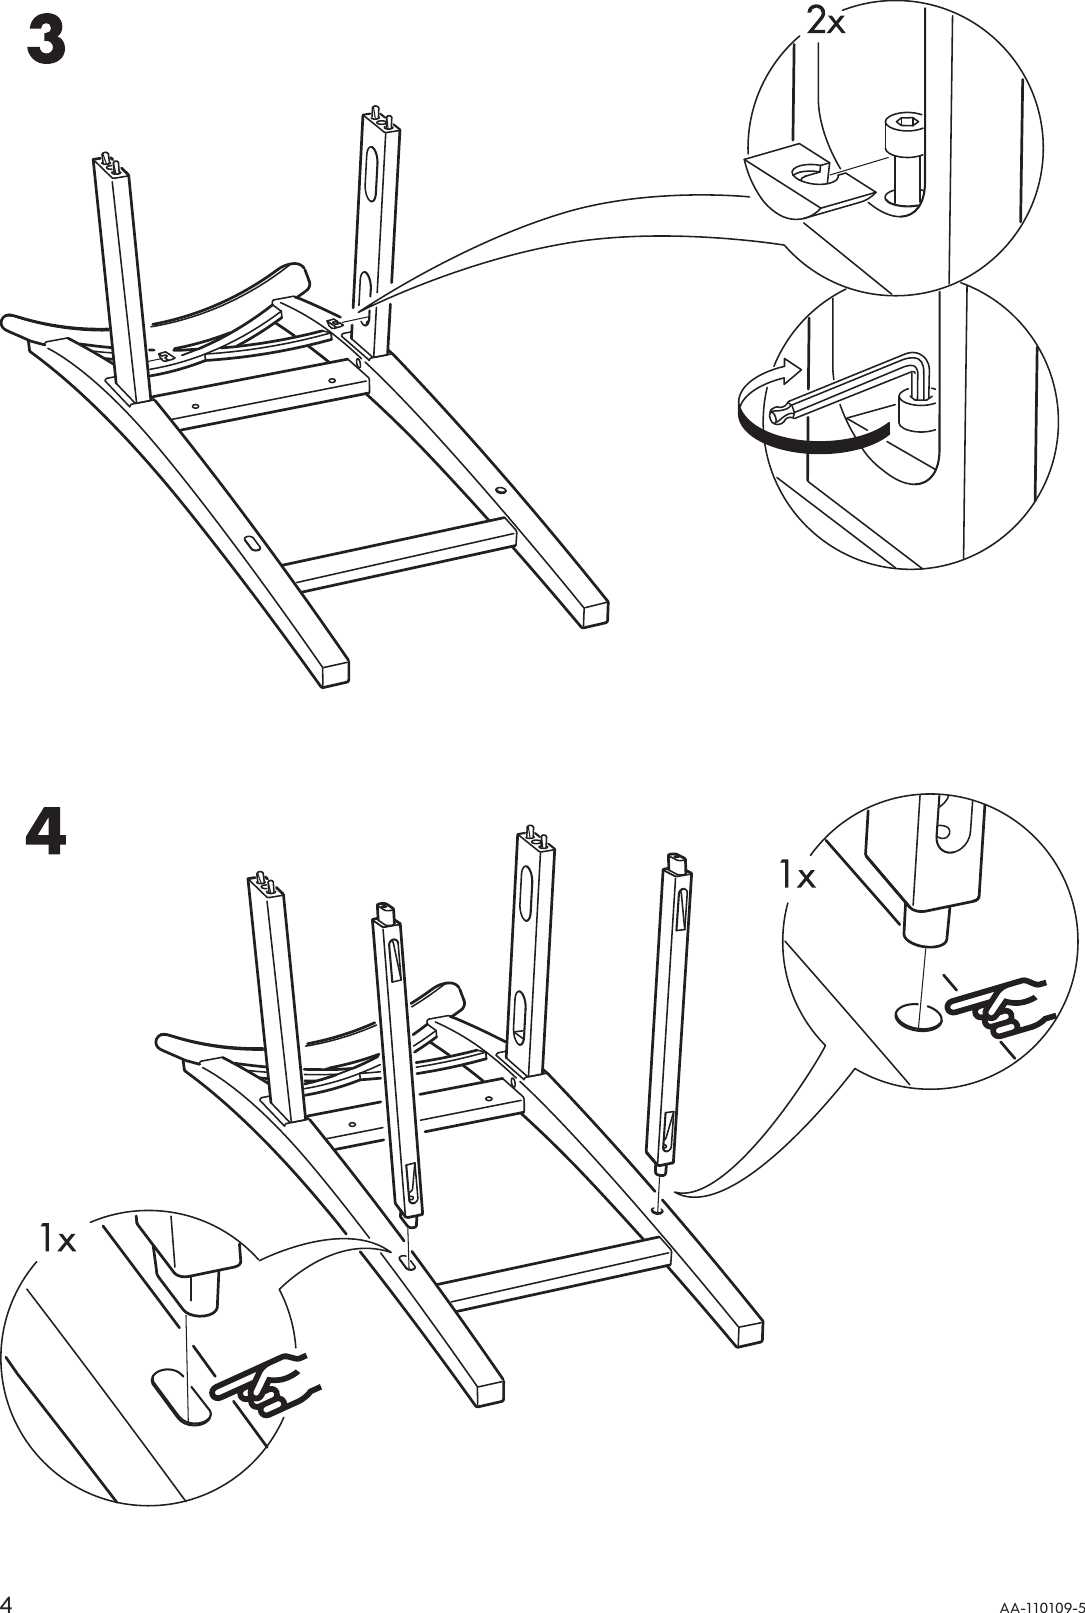 Page 4 of 8 - Ikea Ikea-Ingolf-Bar-Stool-W-Backrst-29-1-8-Assembly-Instruction